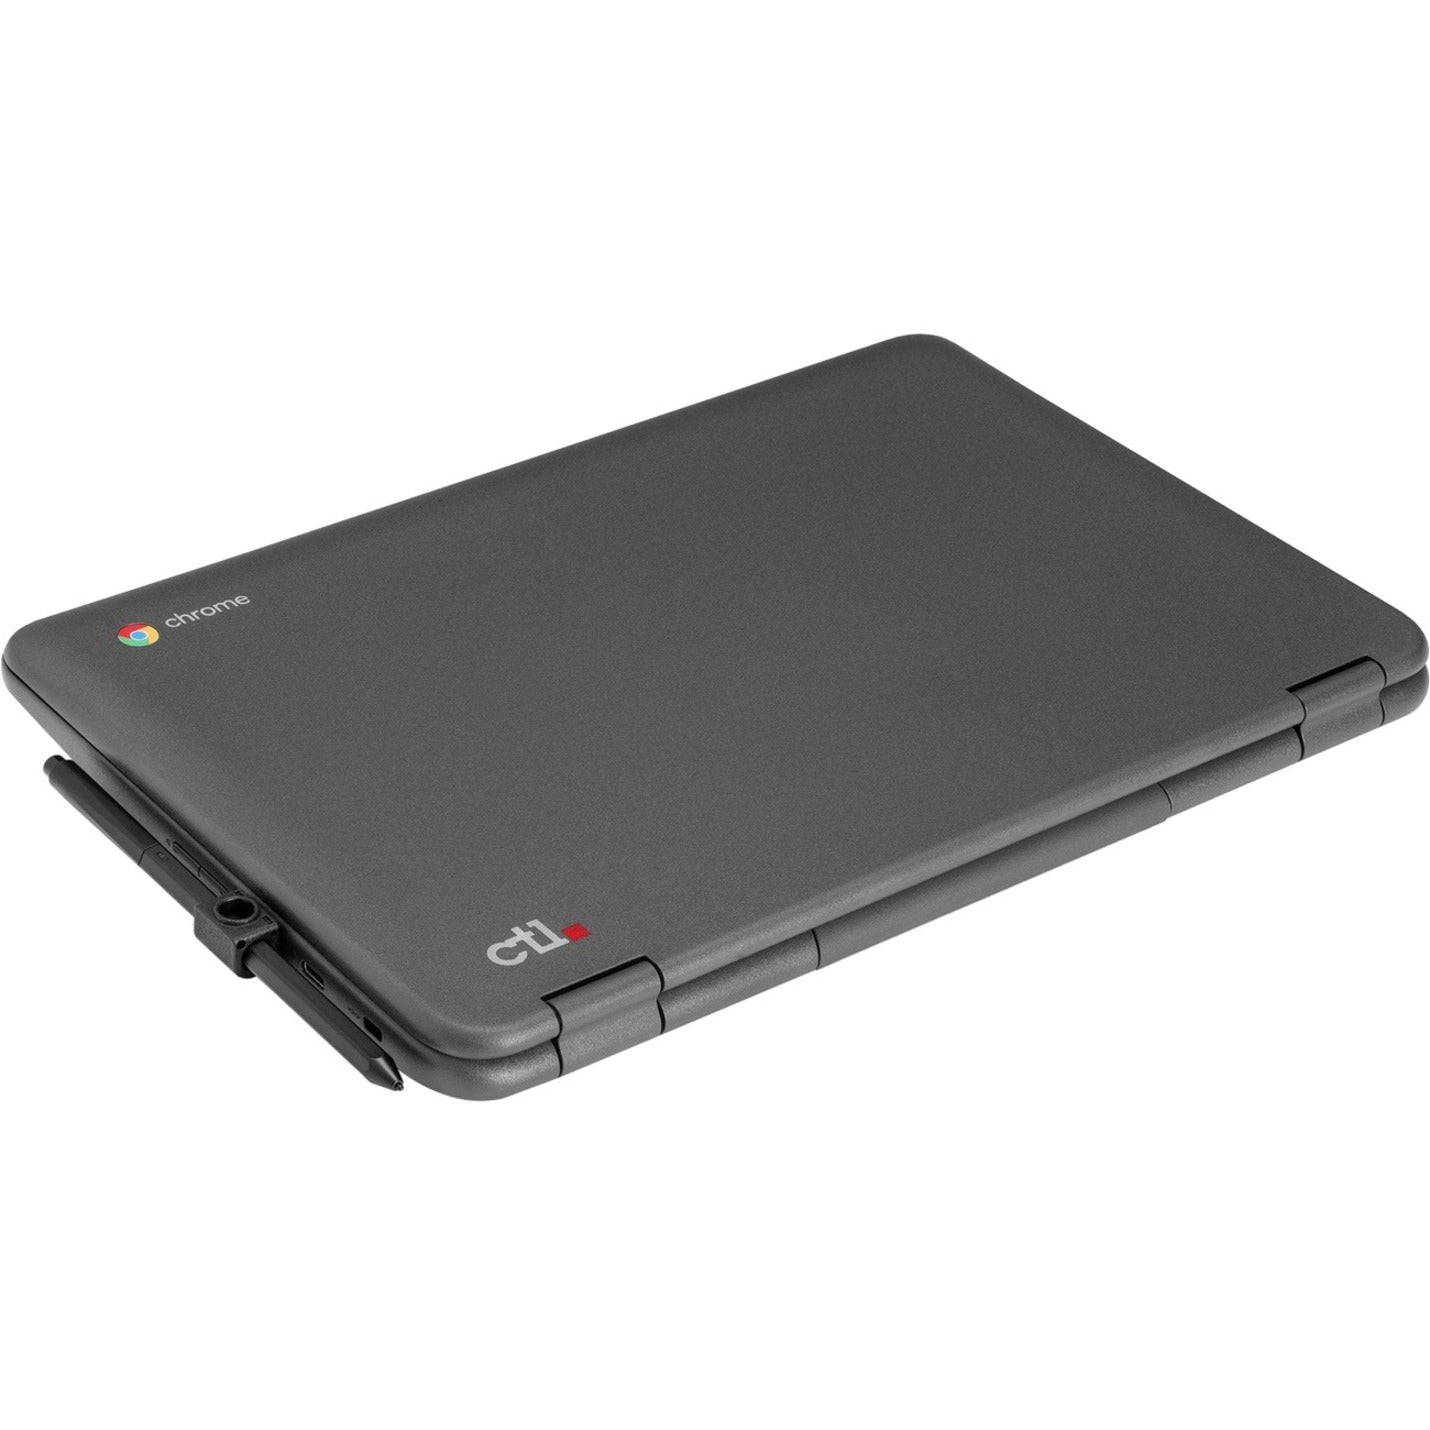 CTL CBUS1100003 Chromebook NL71TW 2 in 1 Chromebook, 11.6" Touchscreen, Intel Celeron N4120, 4GB RAM, 32GB Flash Memory